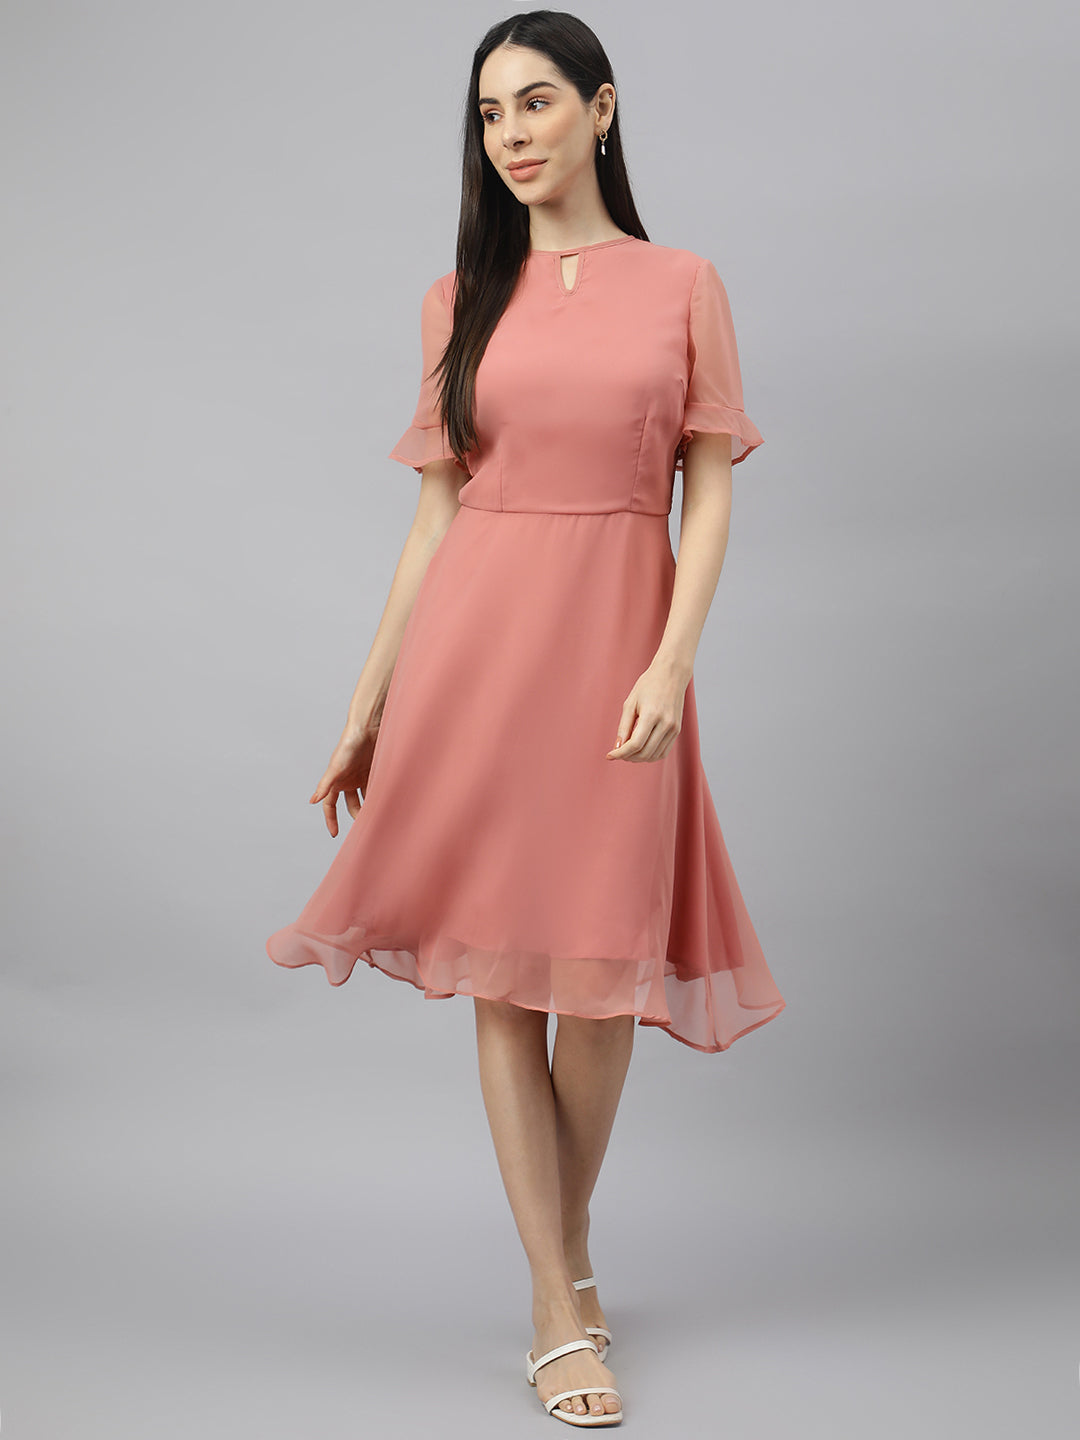 Valbone Women’s Pink Georgette Floral Print Dress